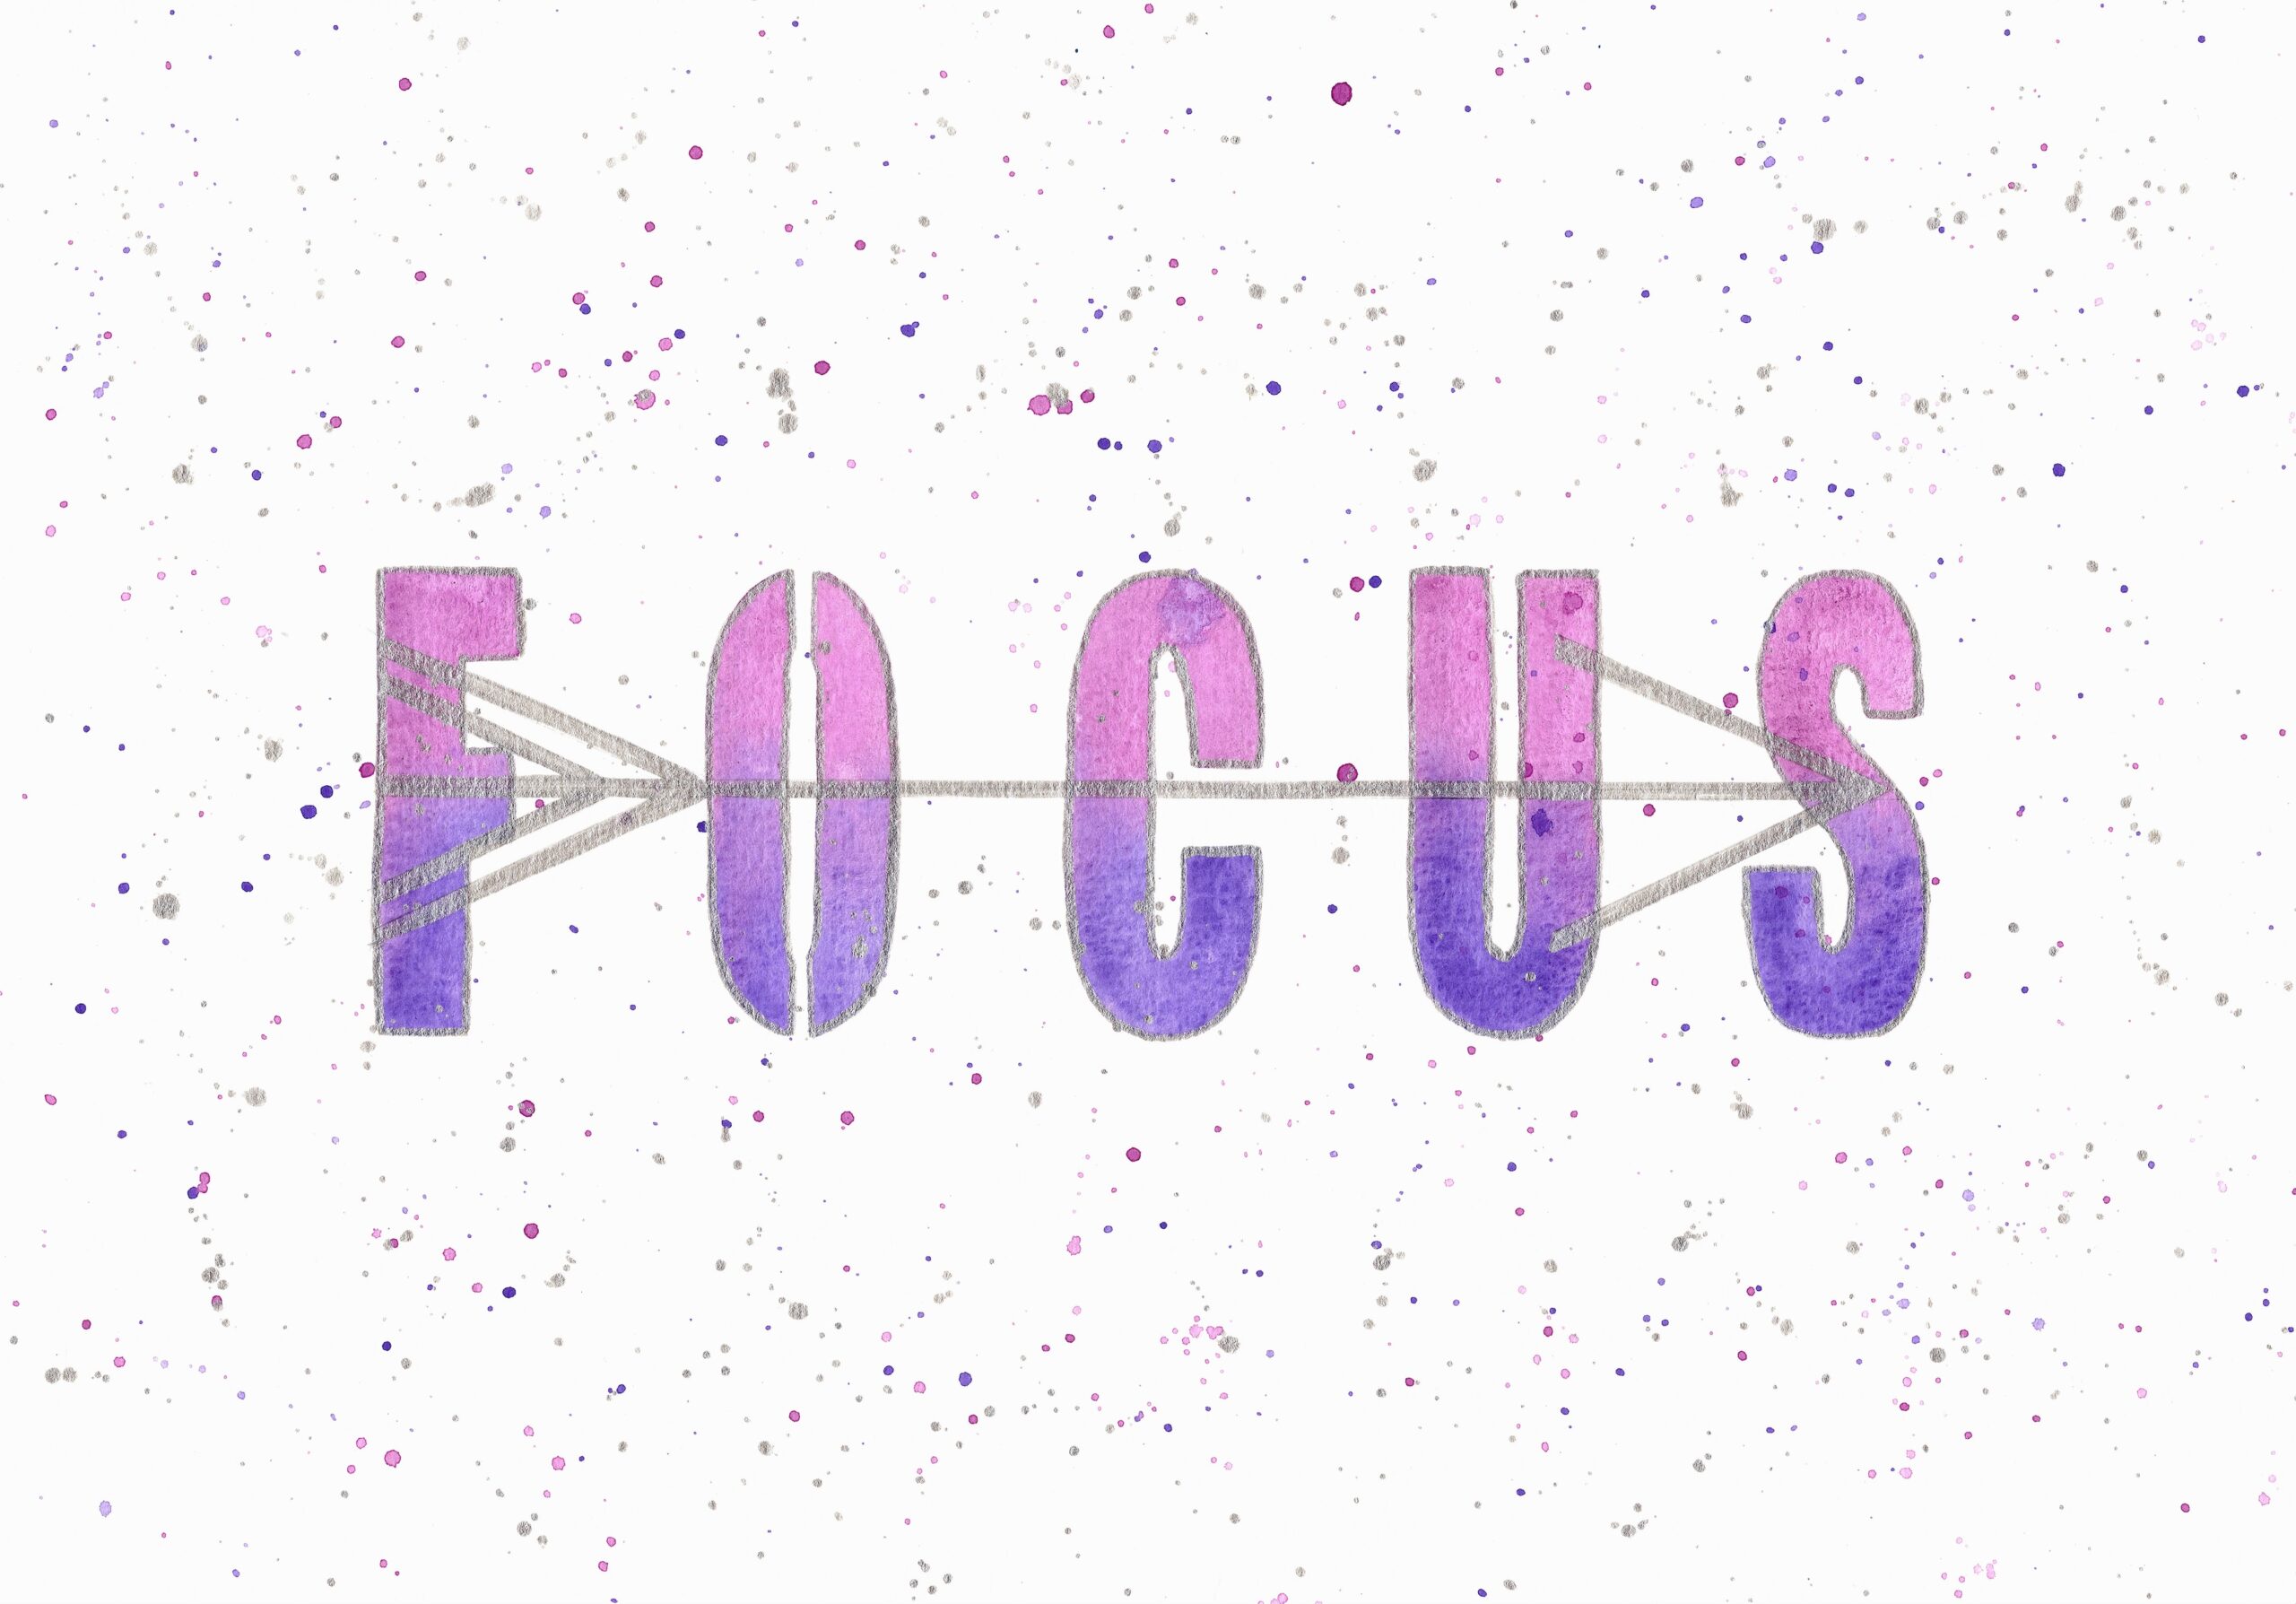 One Little Word: Focus